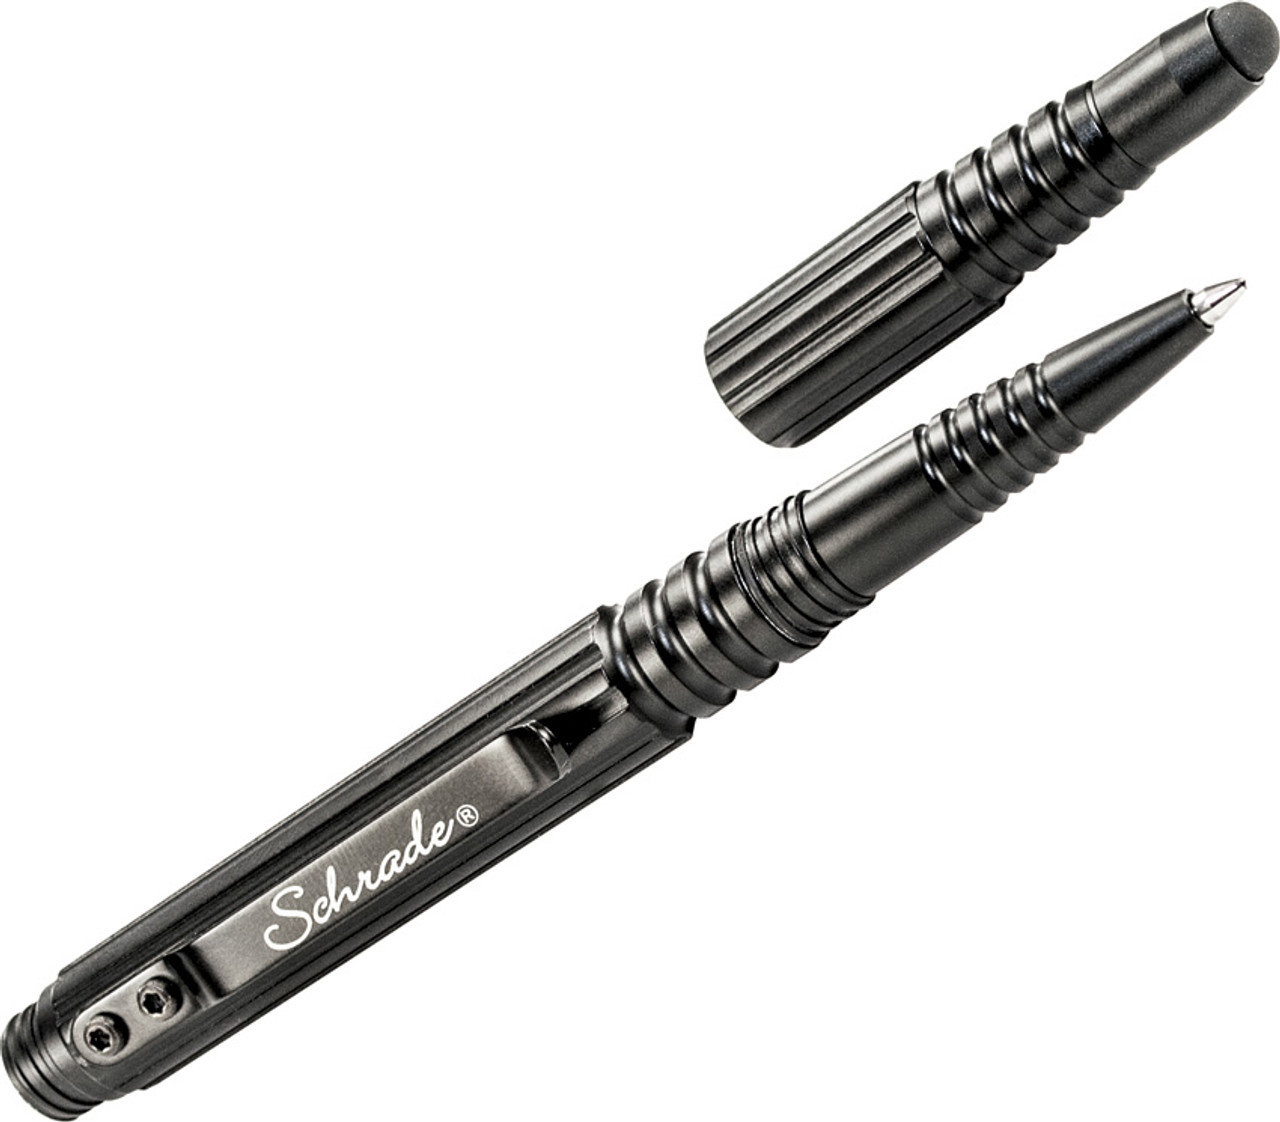 Schrade Tactical Ti Stylus Pen (Black)